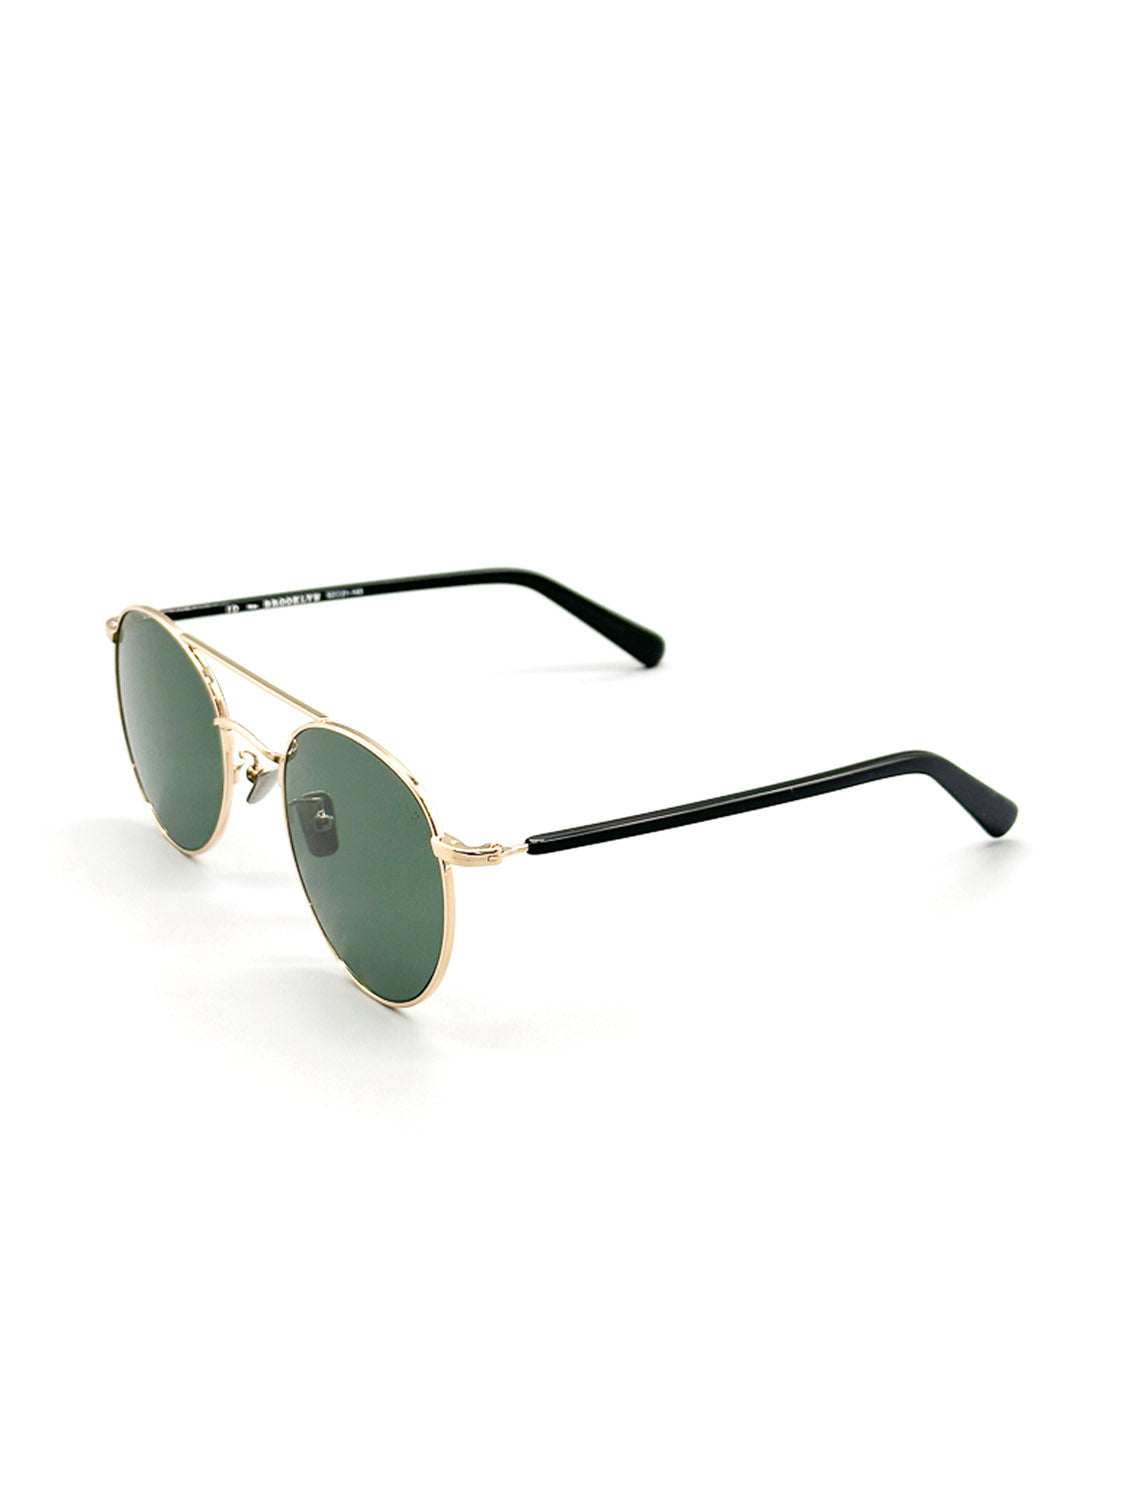 M433G - ID polarized sunglasses